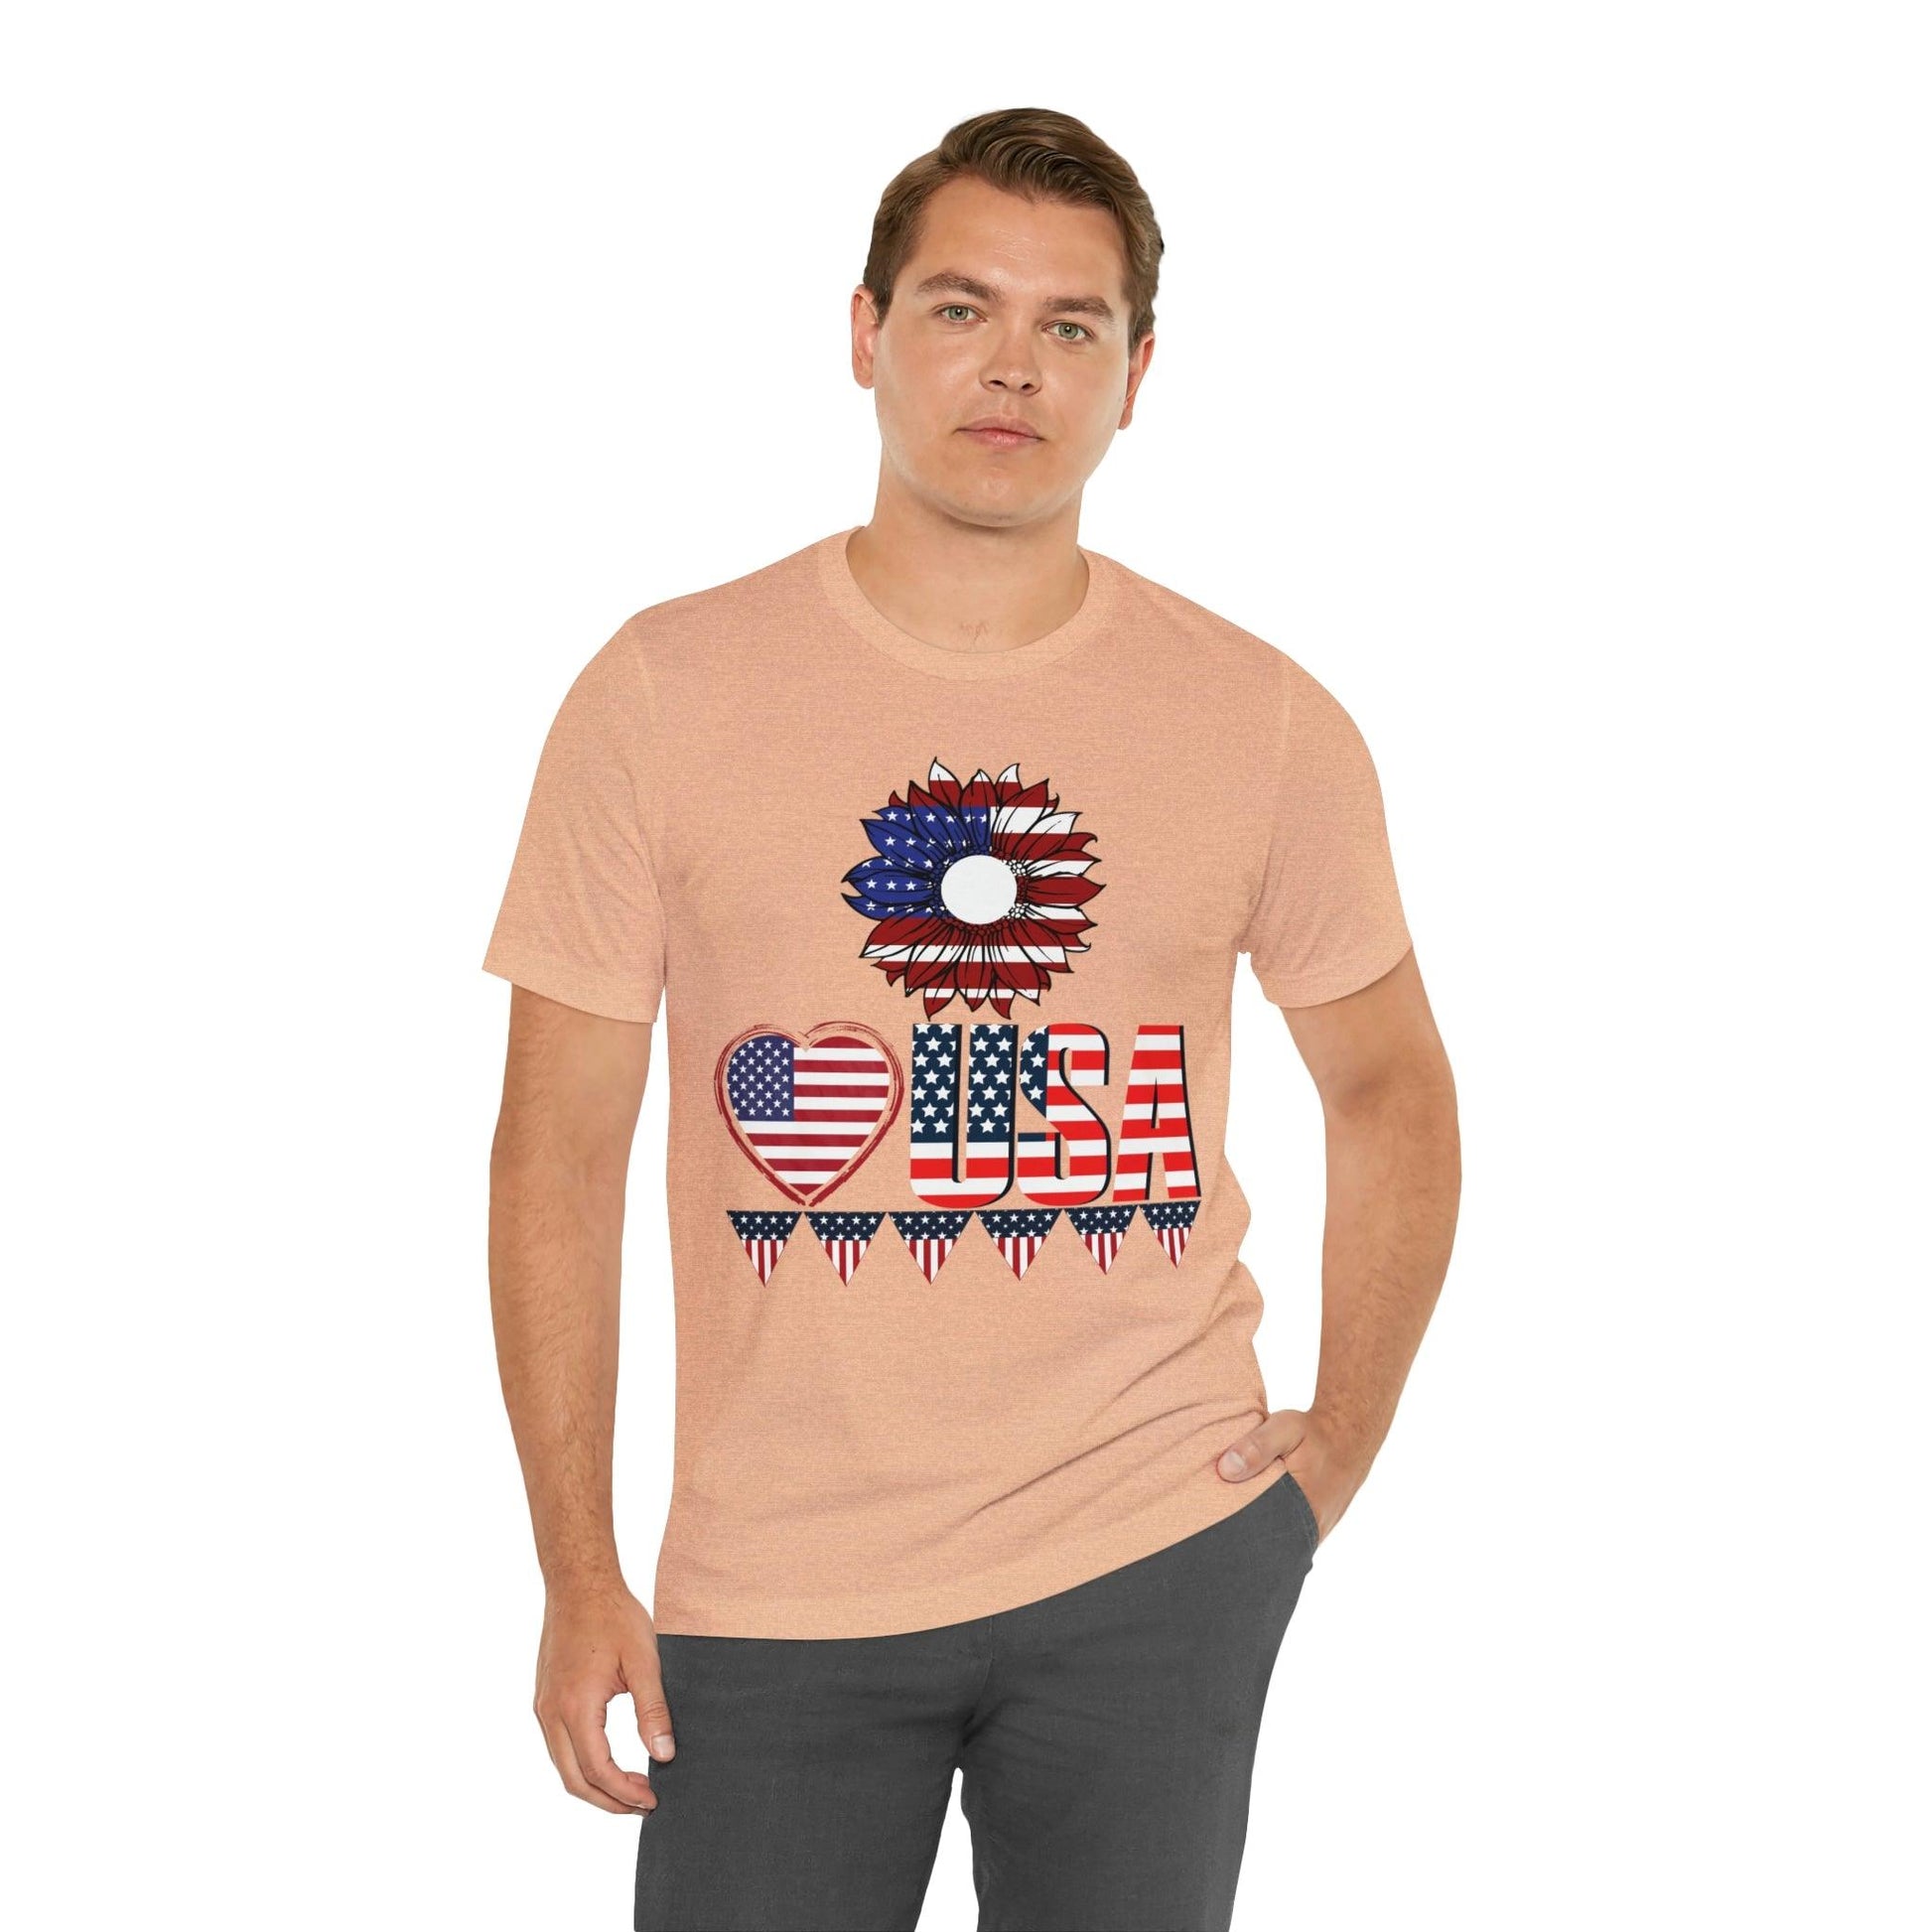 American flag shirt, Red, white, and blue shirt, Flower Love USA shirt, - Giftsmojo